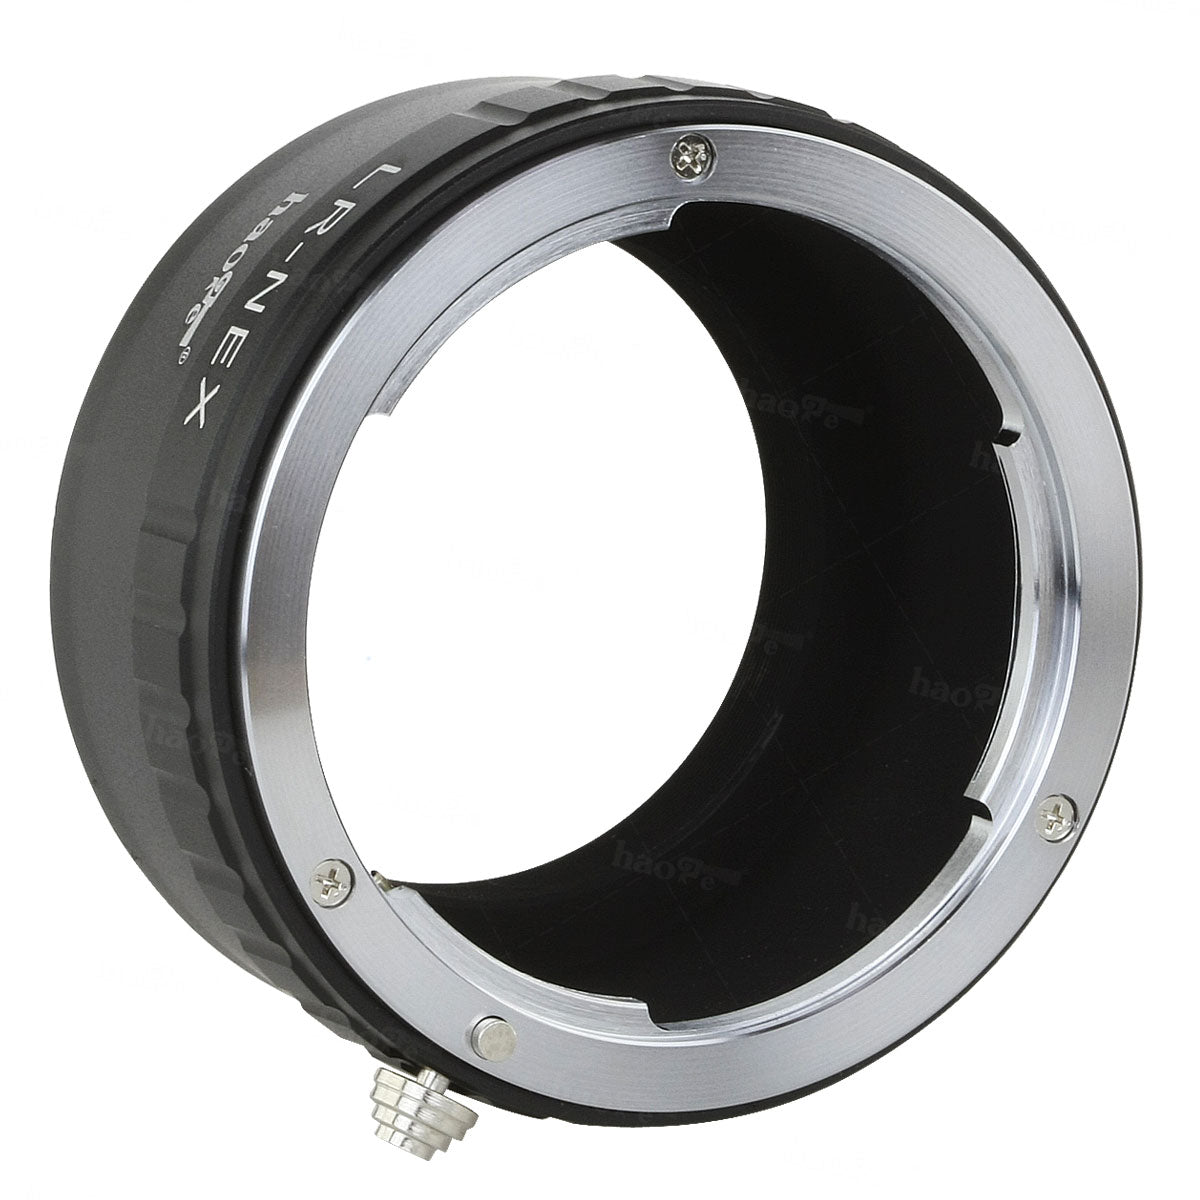 Haoge Lens Mount Adapter for Leica R LR Mount Lens to Sony E-mount NEX Camera such as NEX-3, NEX-5, NEX-5N, NEX-7, NEX-7N, NEX-C3, NEX-F3, a6300, a6000, a5000, a3500, a3000, NEX-VG10, VG20